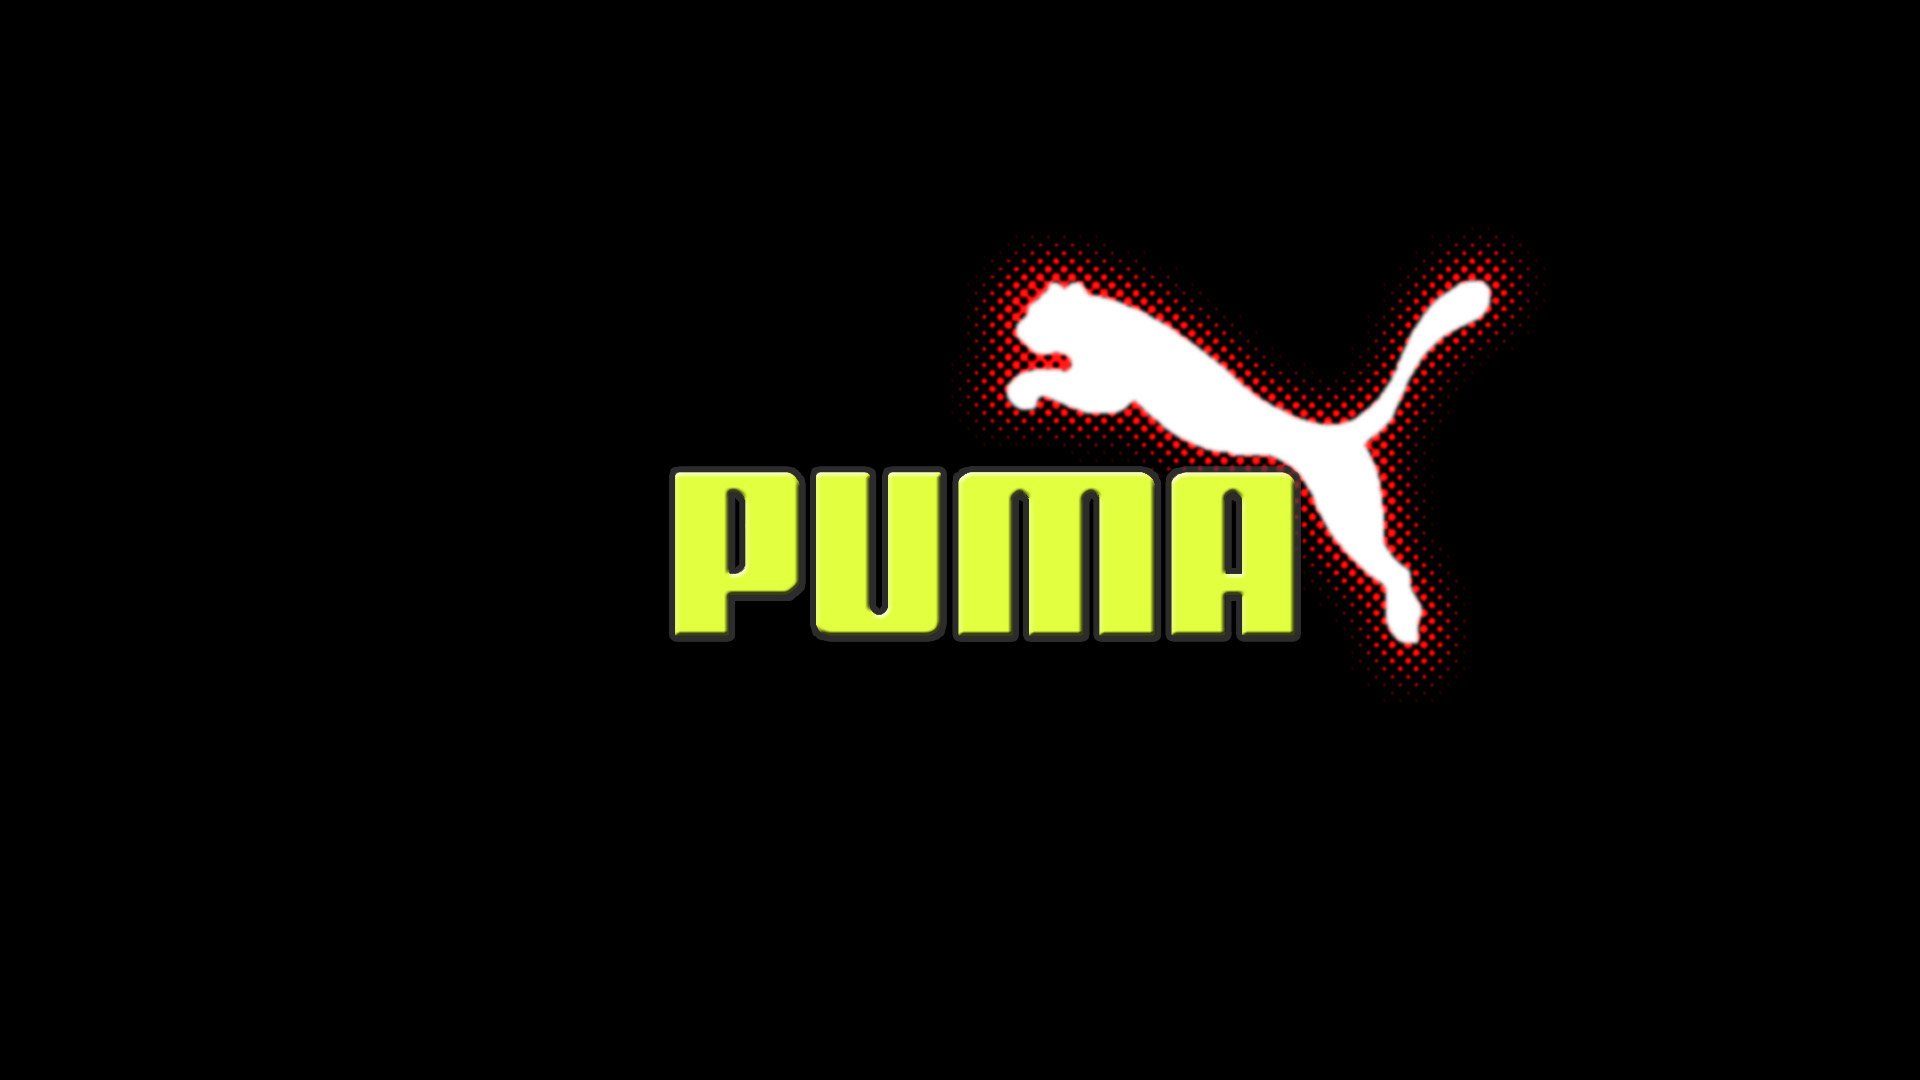 Puma Logo Wallpaper 6266 Hd Wallpapers in Logos   Imagescicom